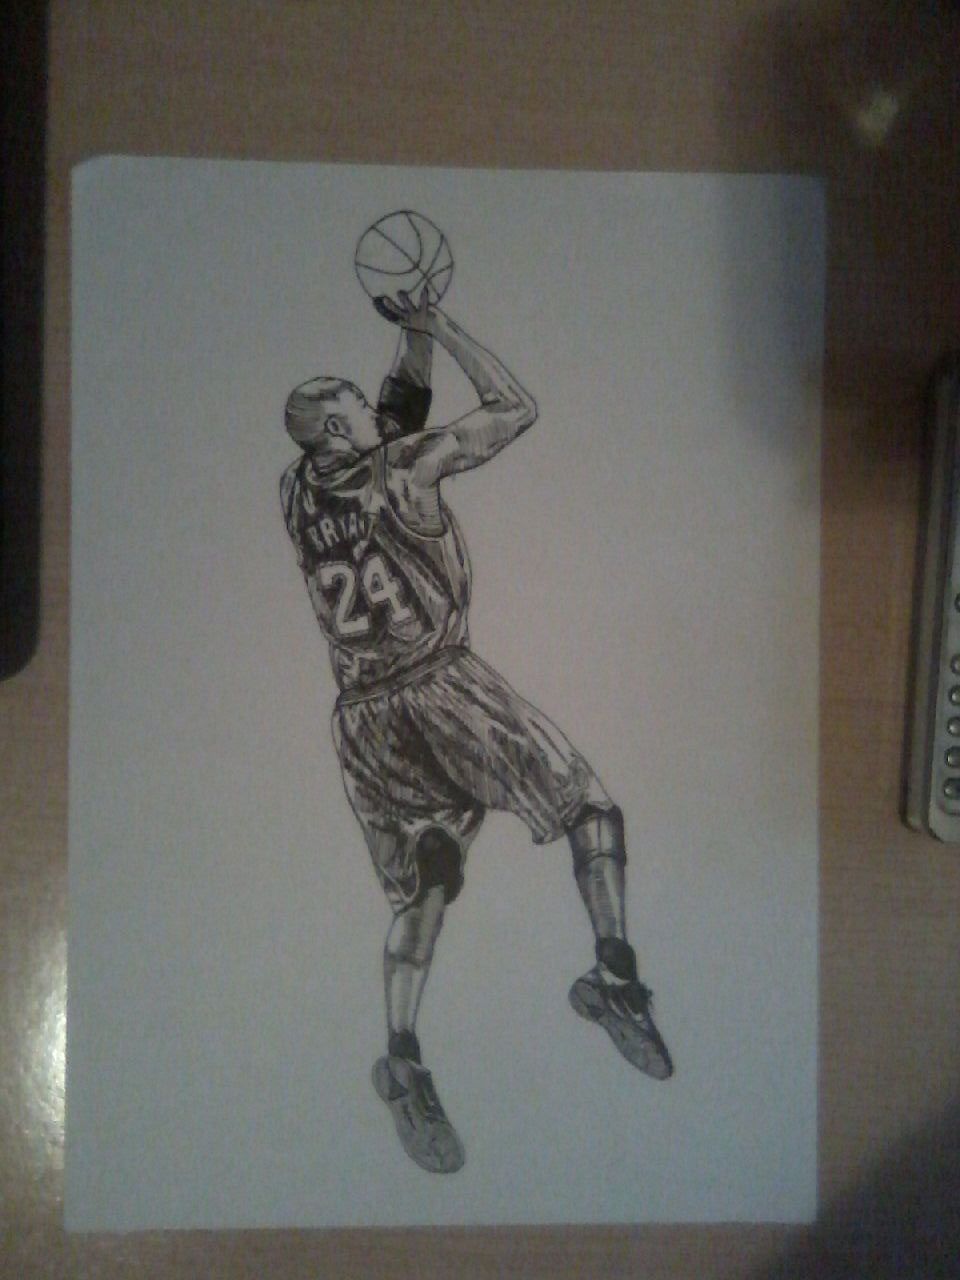 arte digital dibujo ilustracion diseño de personaje NBA Lakers Kobe Bryant basketball